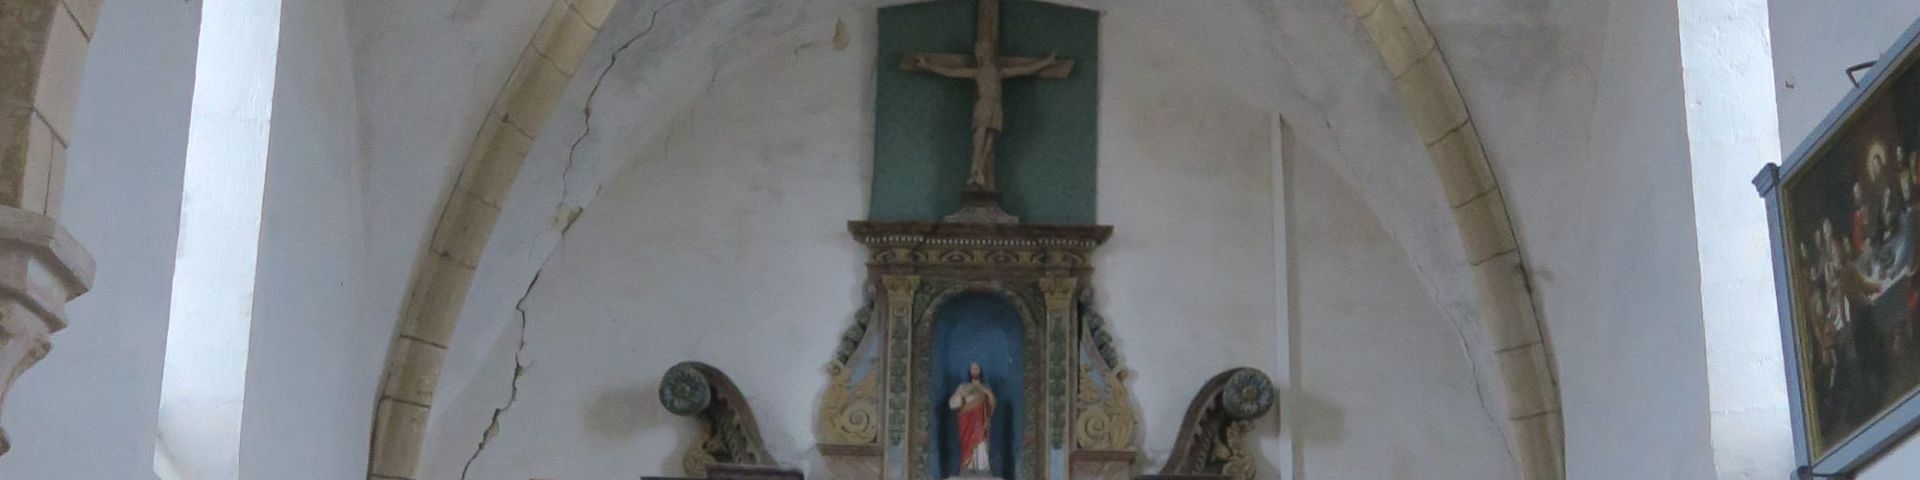 Saint-Euphrône - Eglise St-Clément (21)